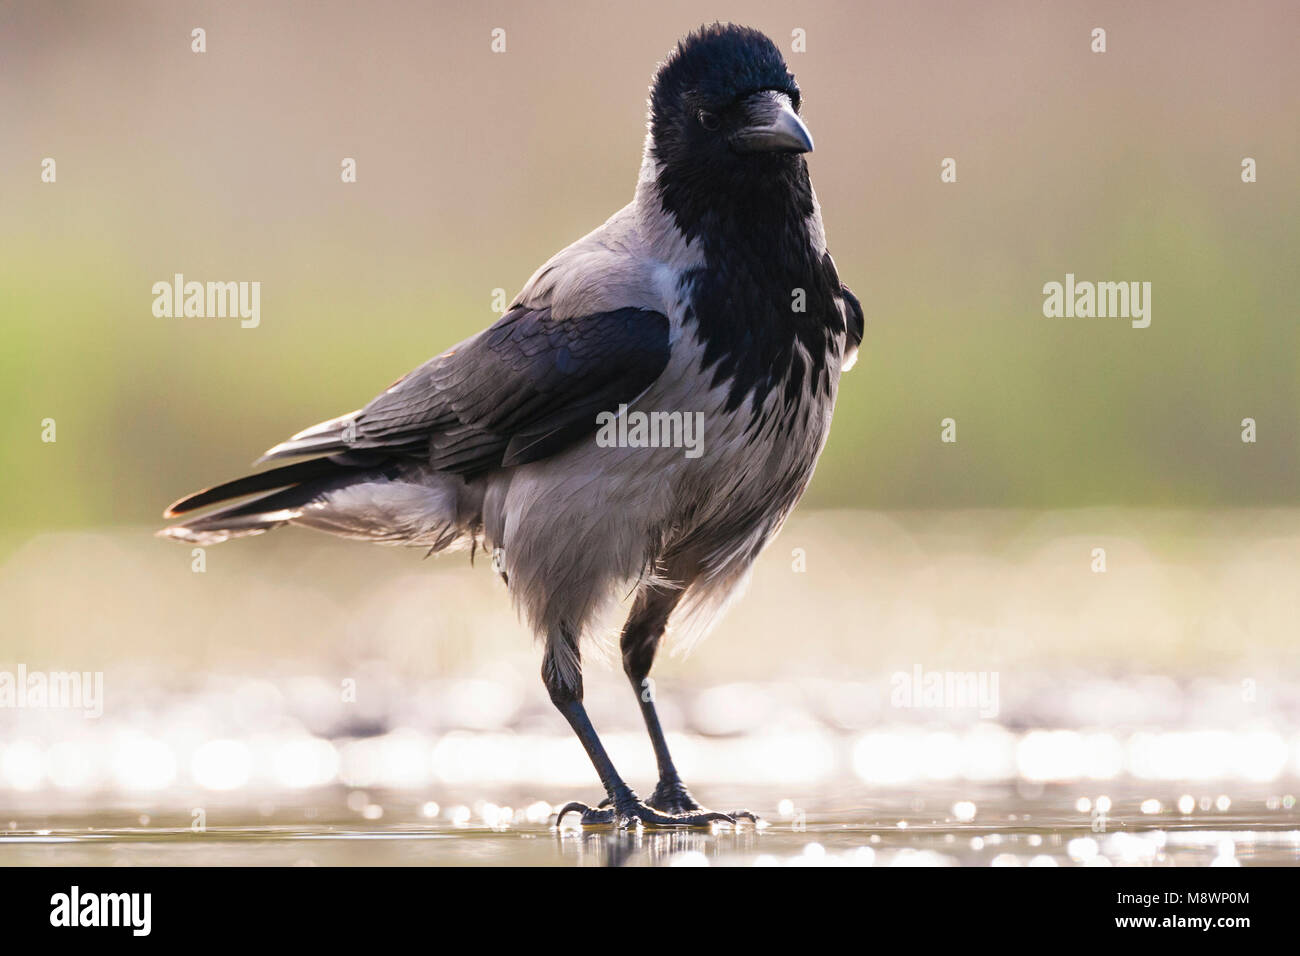 Bonte Kraai staand aan waterkant met tegenlicht; Hooded Crow standing at waterside in backlight Stock Photo